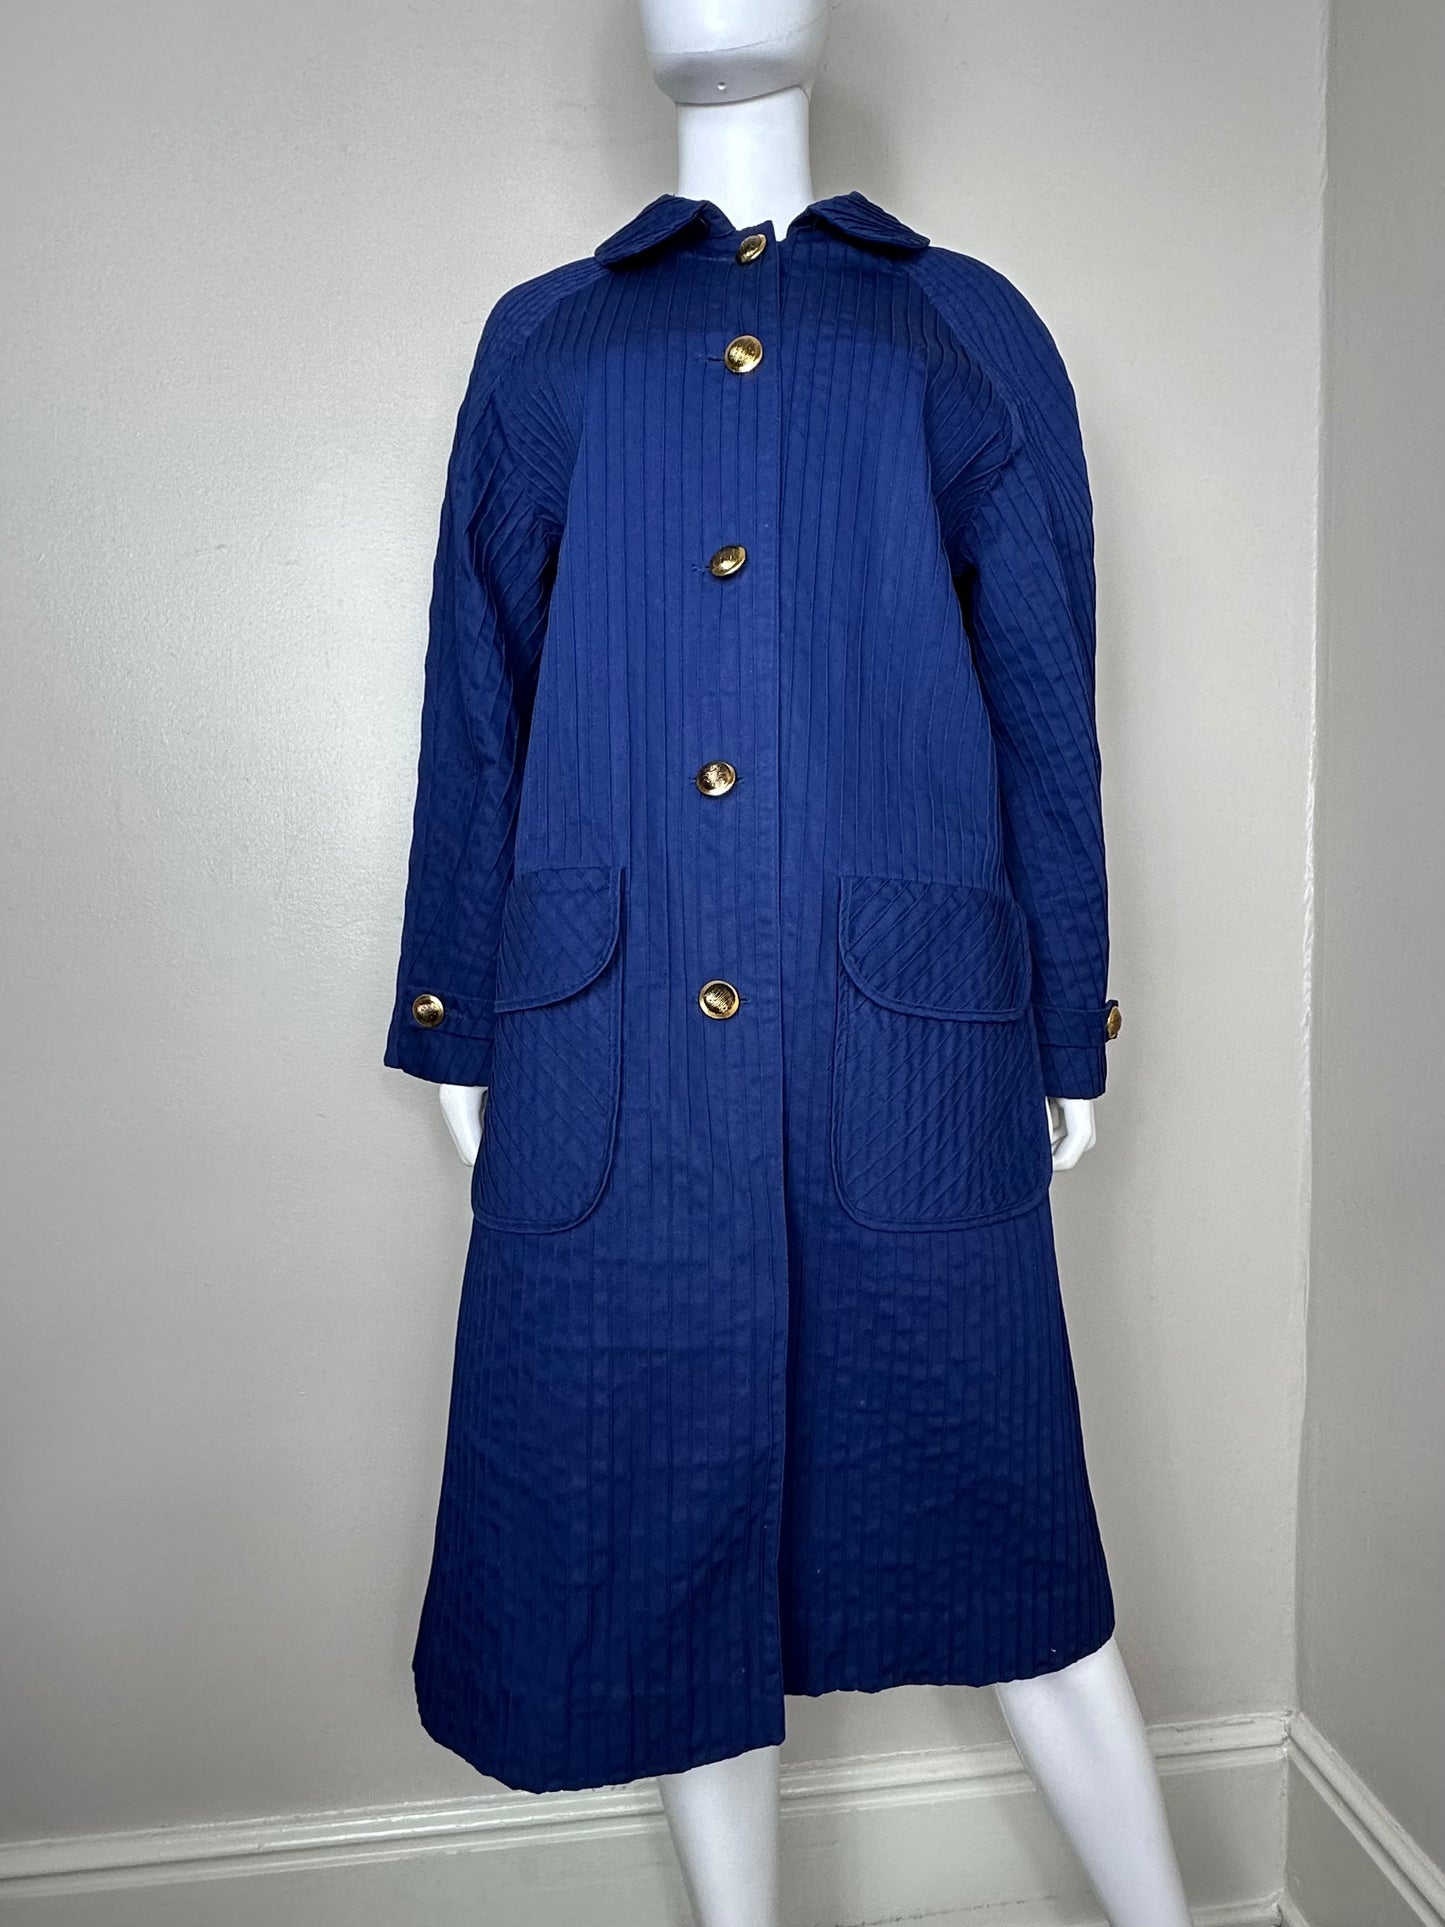 1970s Blue Pintuck Coat, J.C. Penney Size Medium